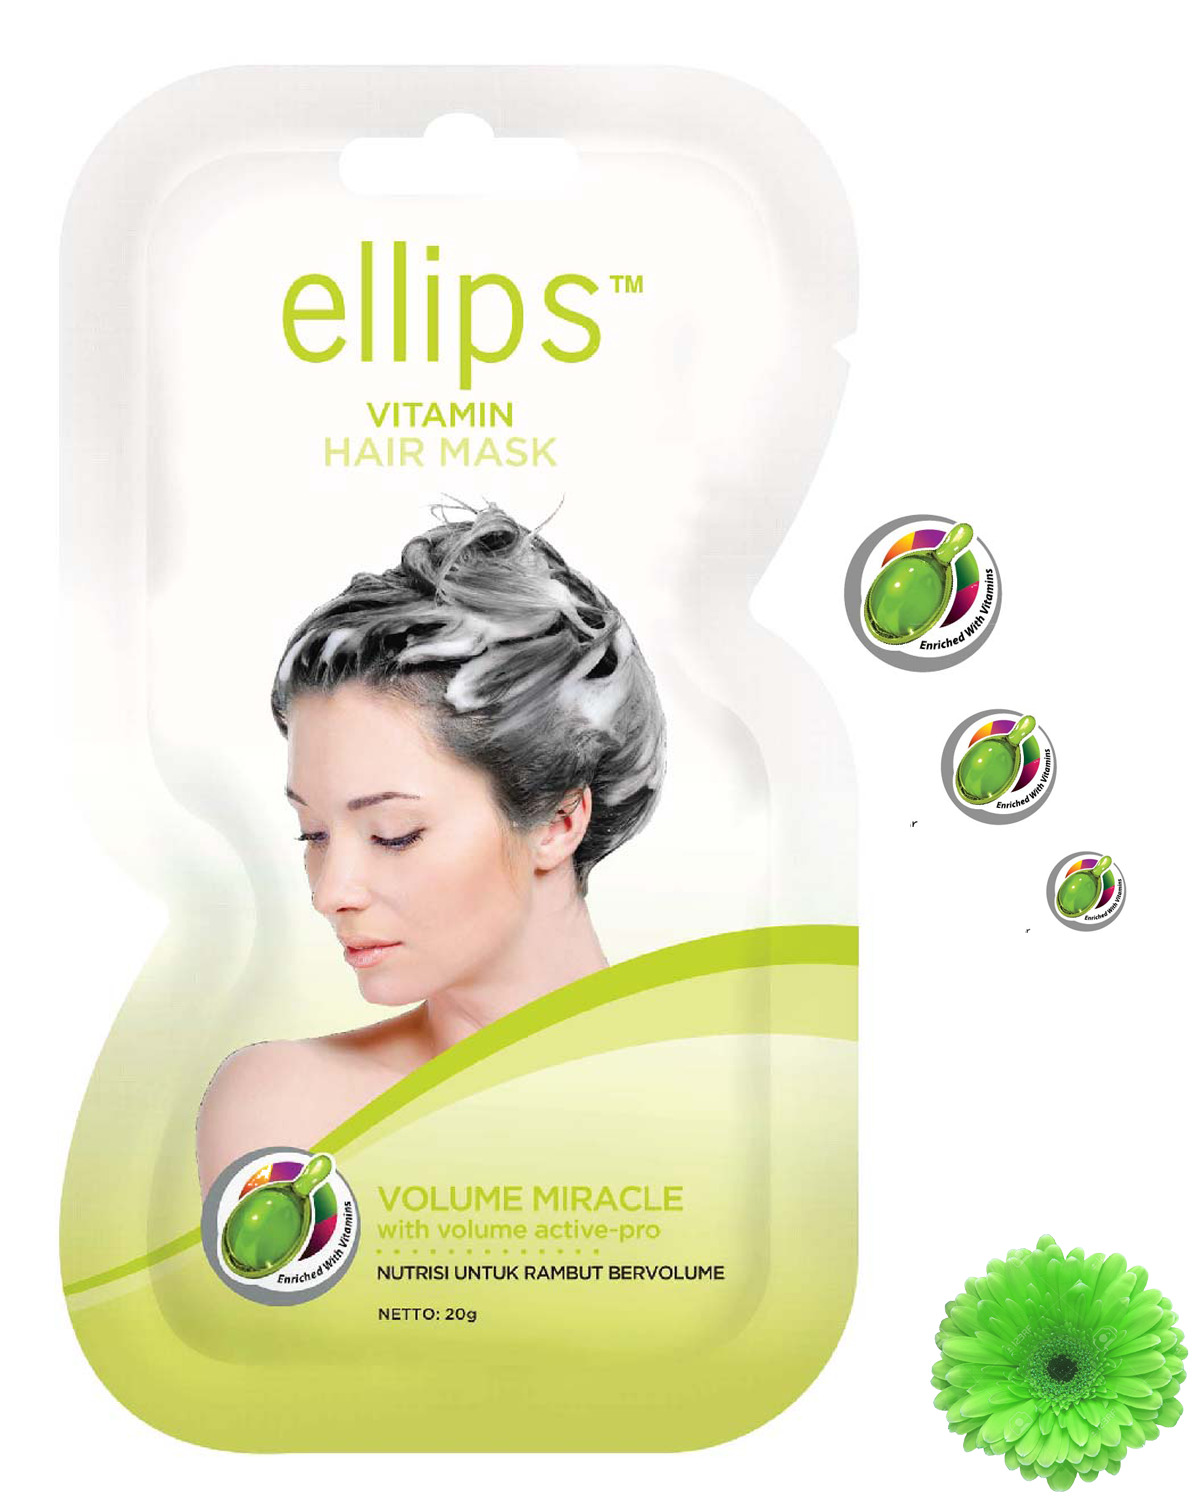 Ellips Hair Vitamin Hair Mask Volume Miracle